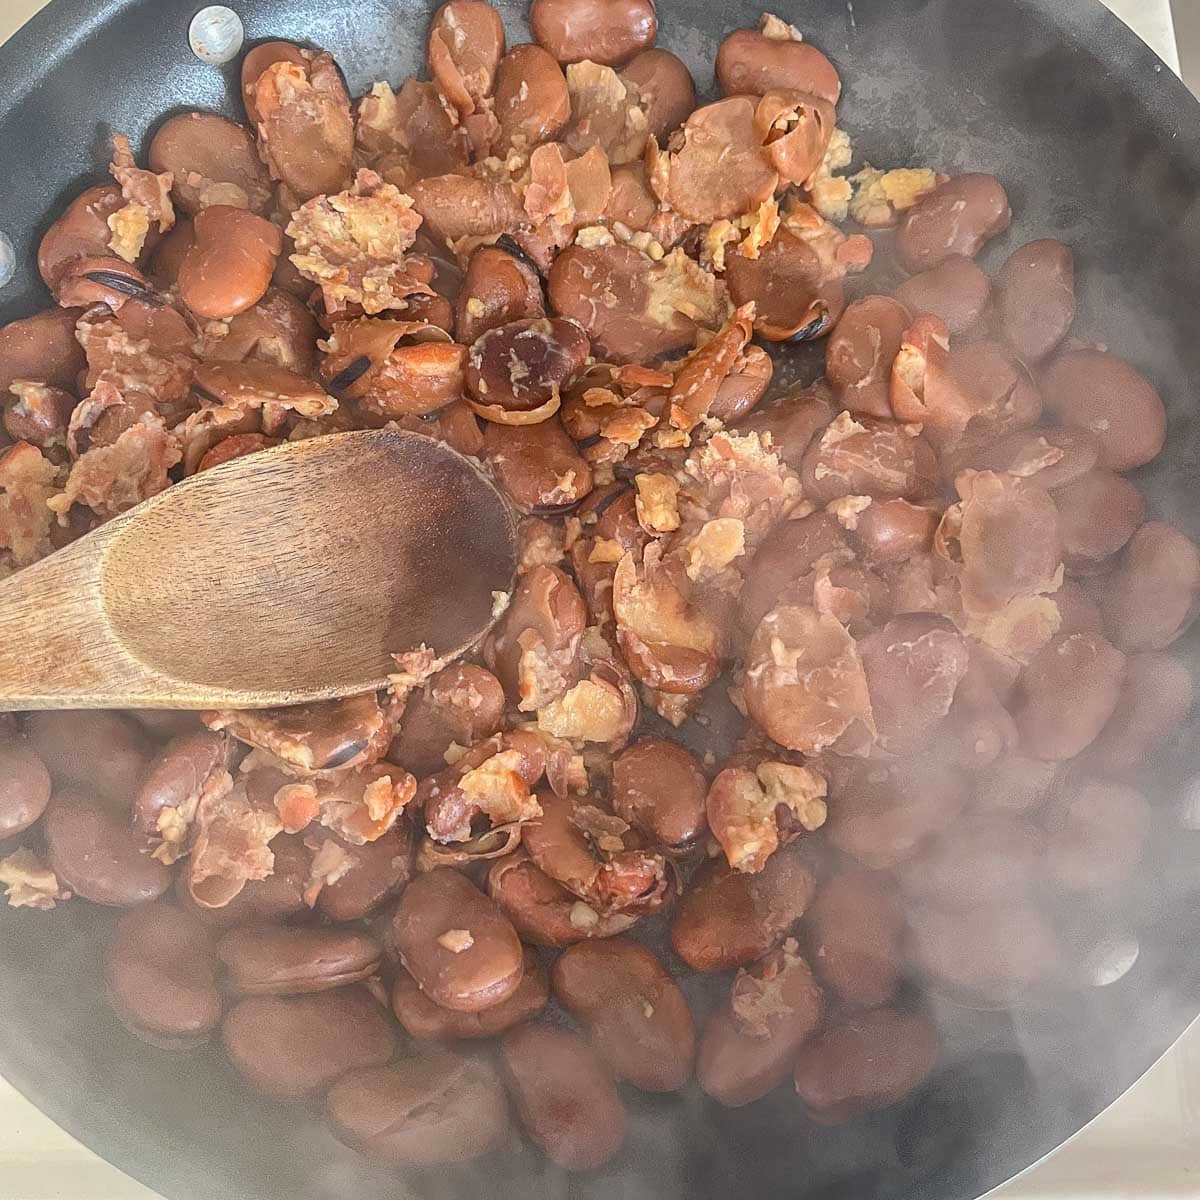 mashing fava beans in a pan